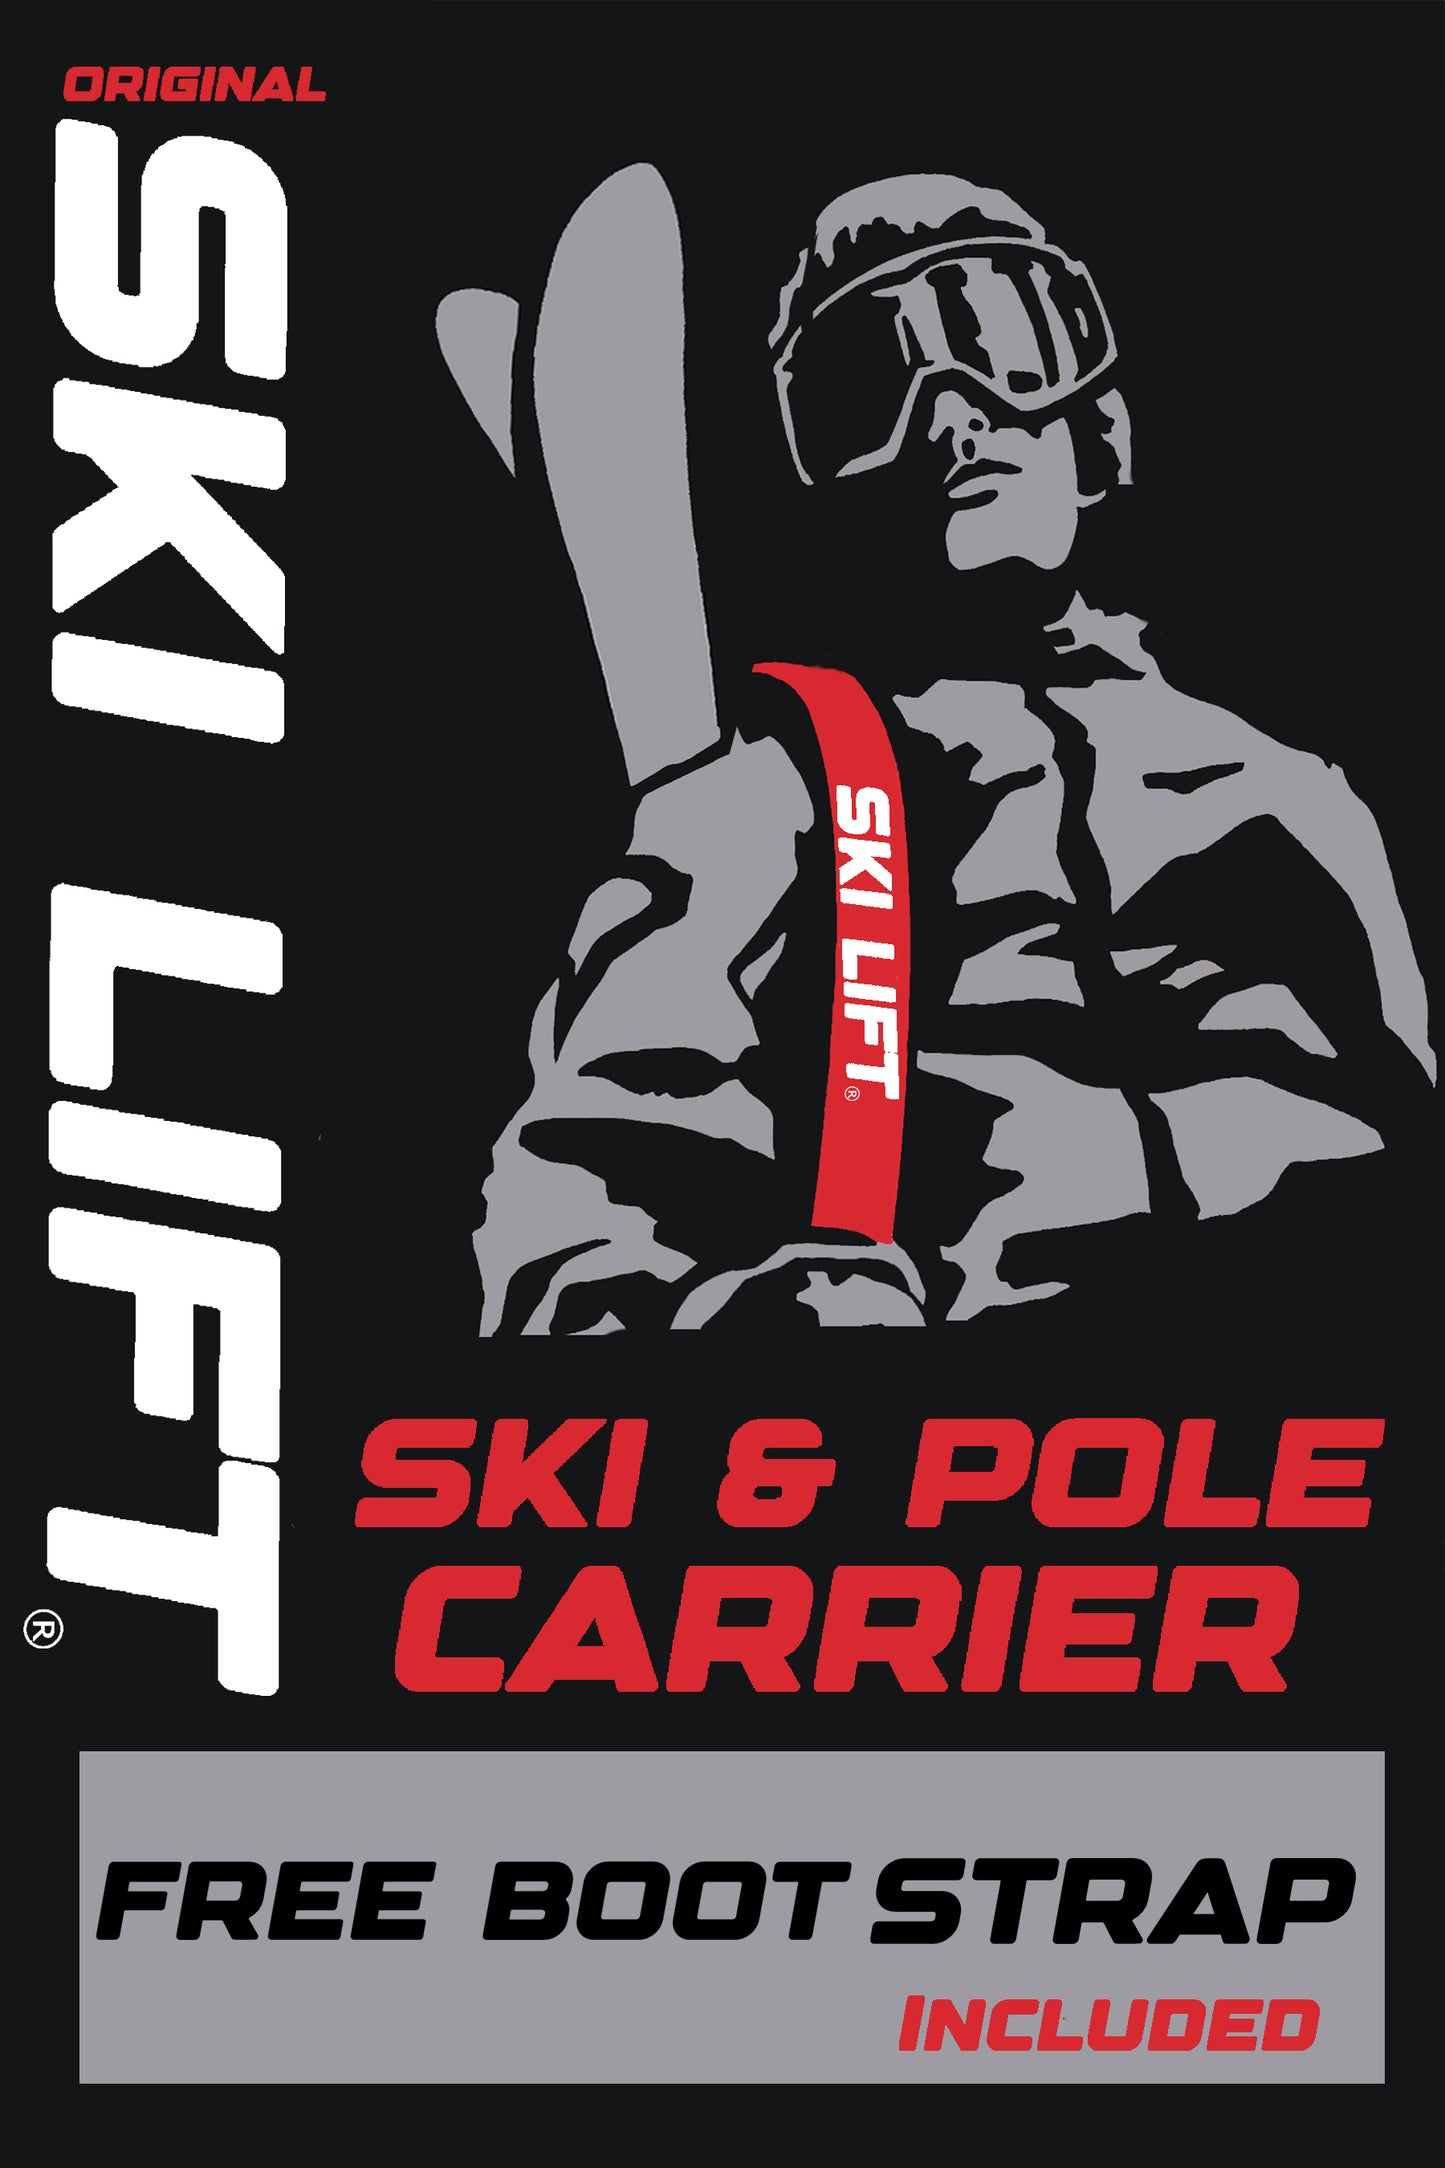 ORIGINAL SKI LIFT Ski & Pole Carrier With FREE Boot Strap